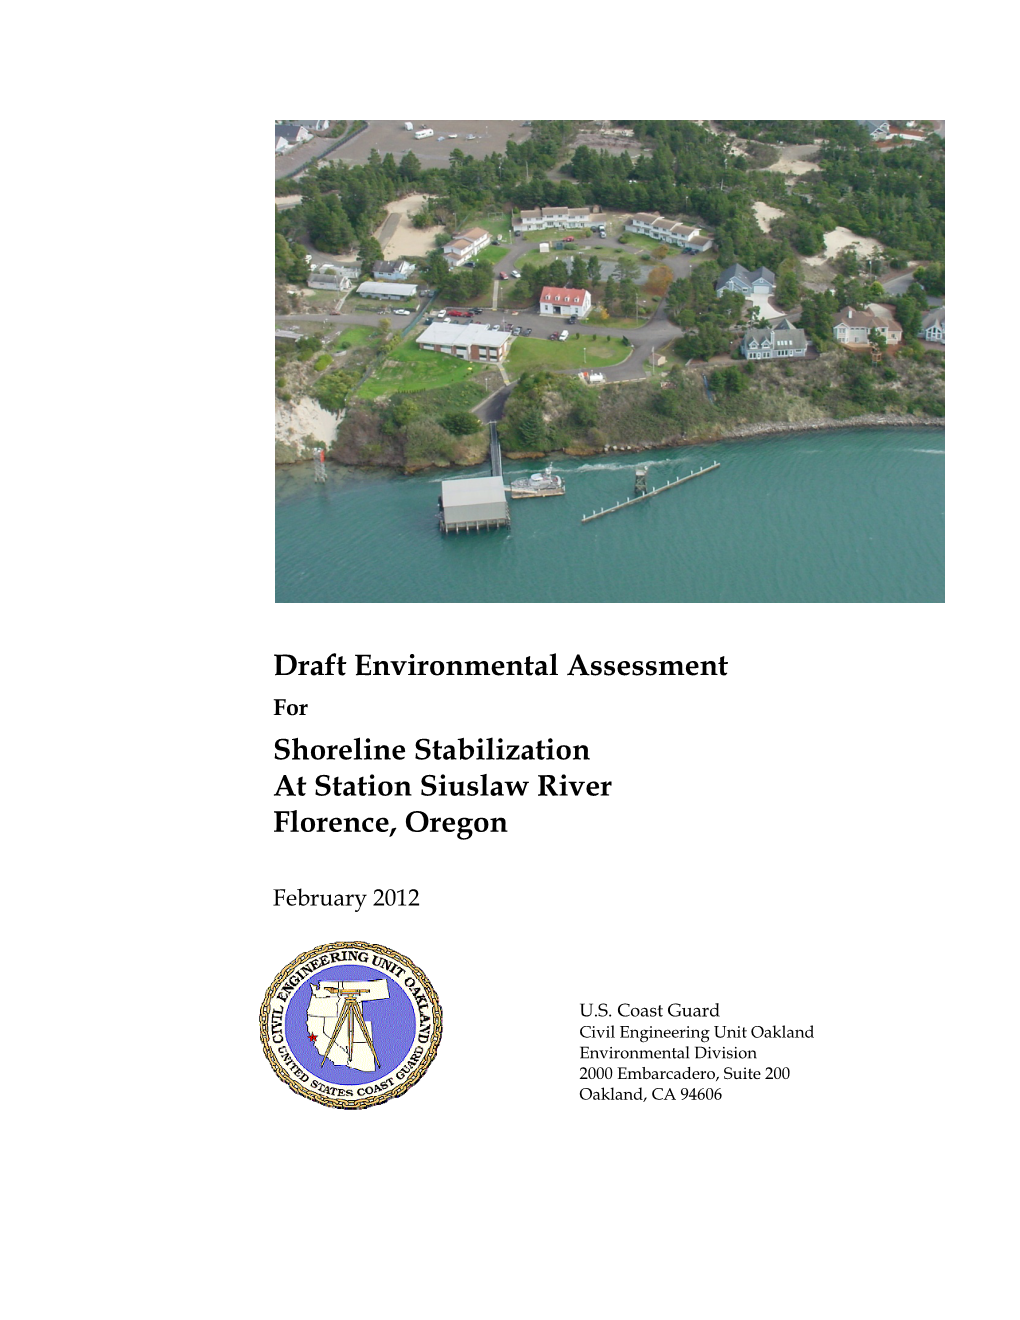 Draft Environmental Assessment Shoreline Stabilization at Station Siuslaw River Florence, Oregon